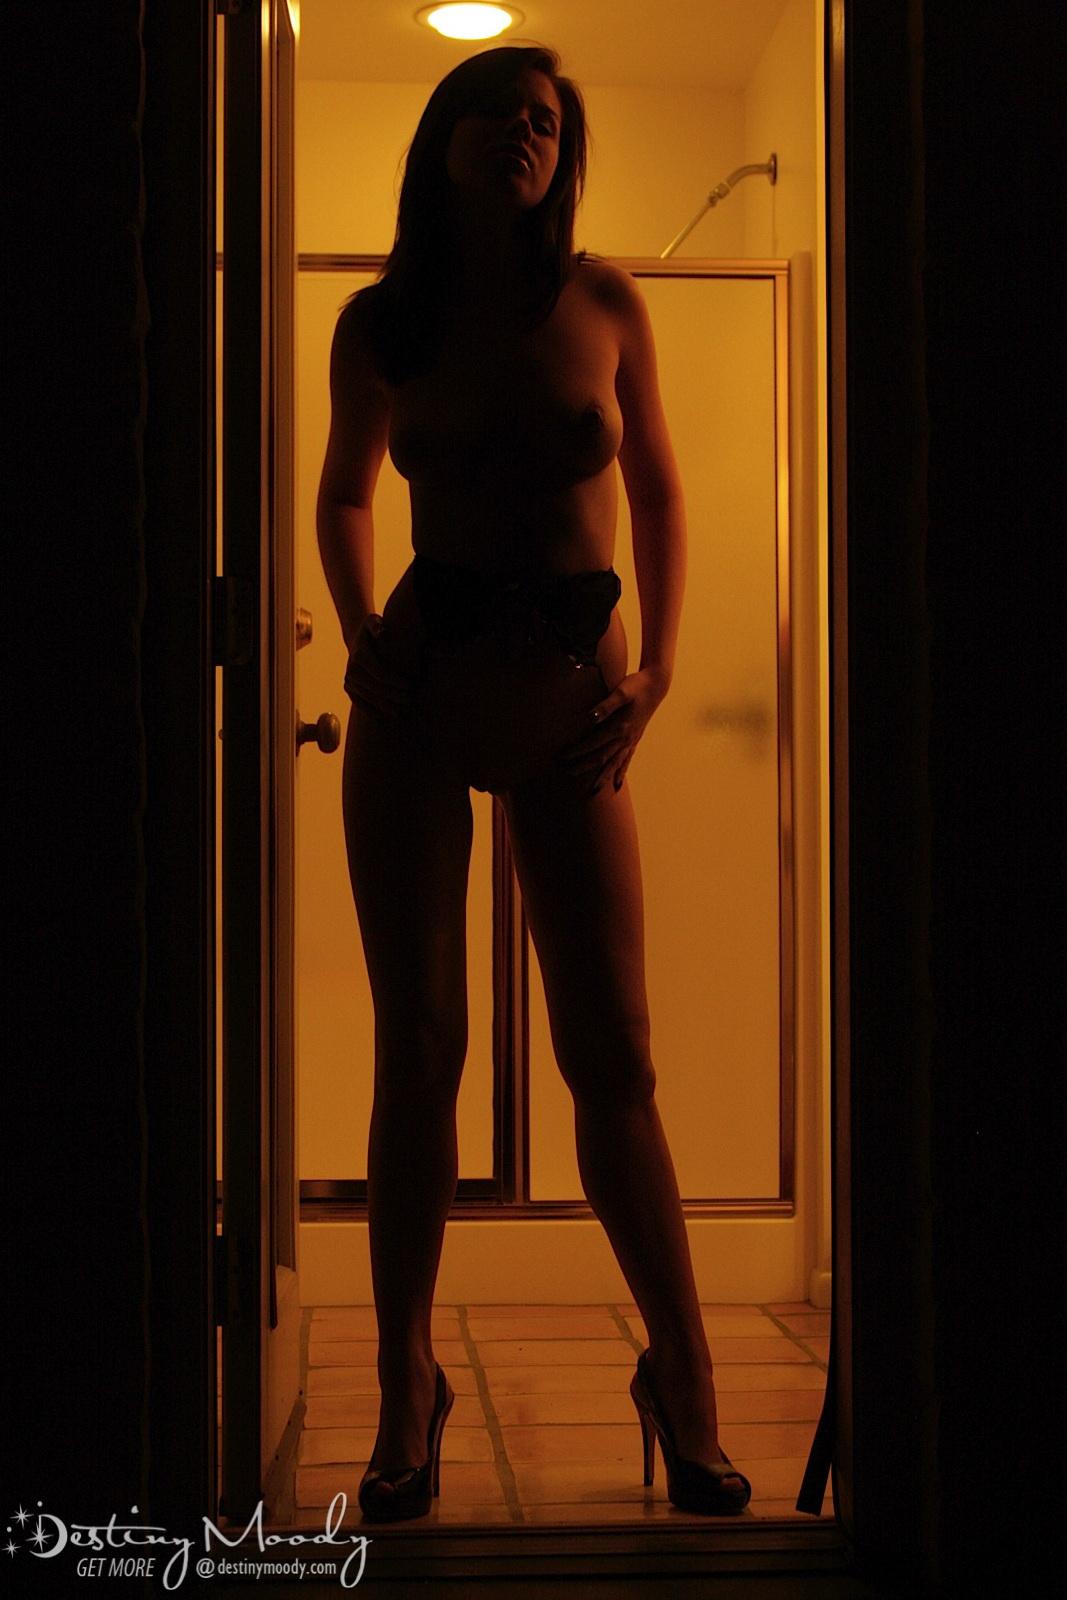 Con un nombre como destiny moody se espera algo erótico y oscuro como esta serie de fotos de desnudos
 #54043376